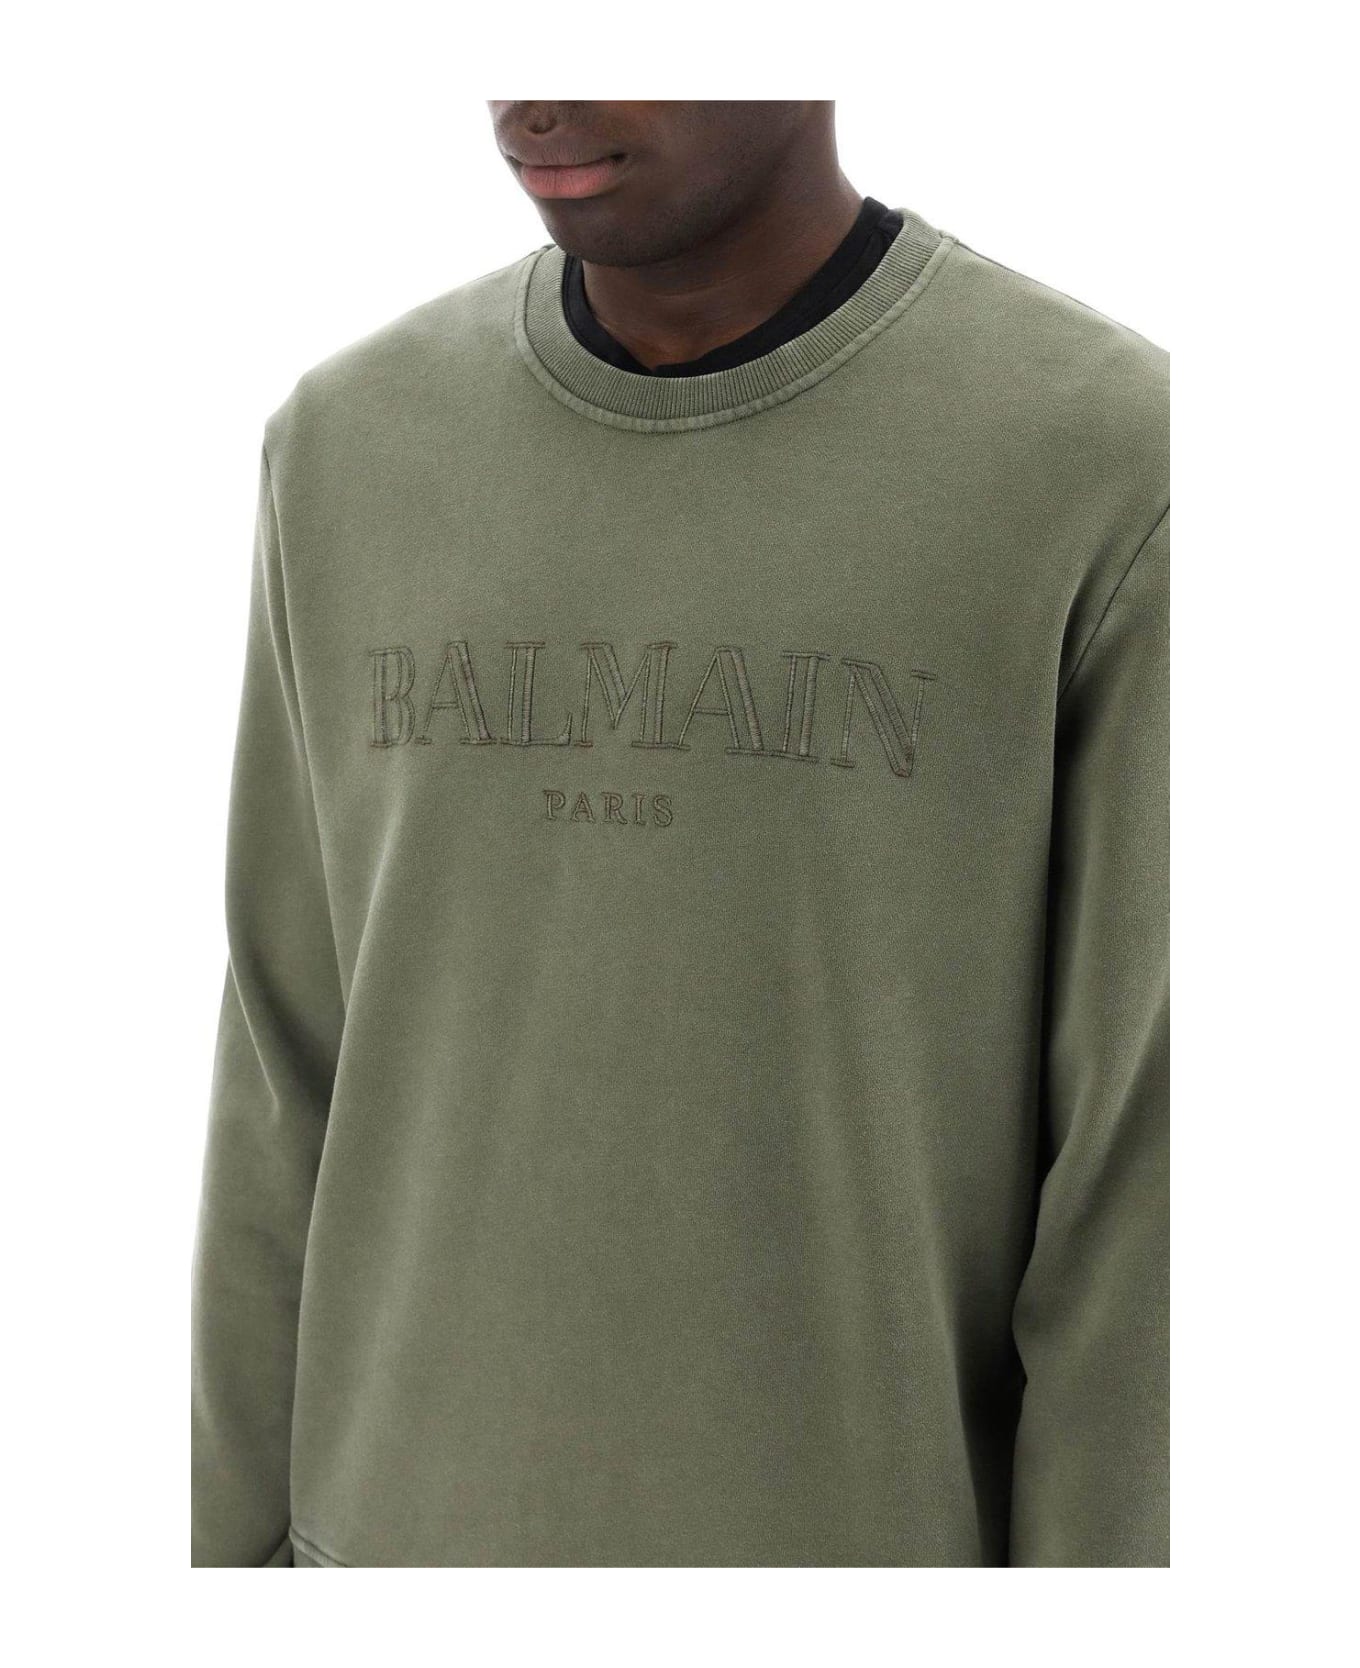 Balmain Vintage Logo Embroidered Sweatshirt - KAKI KAKI (Green)